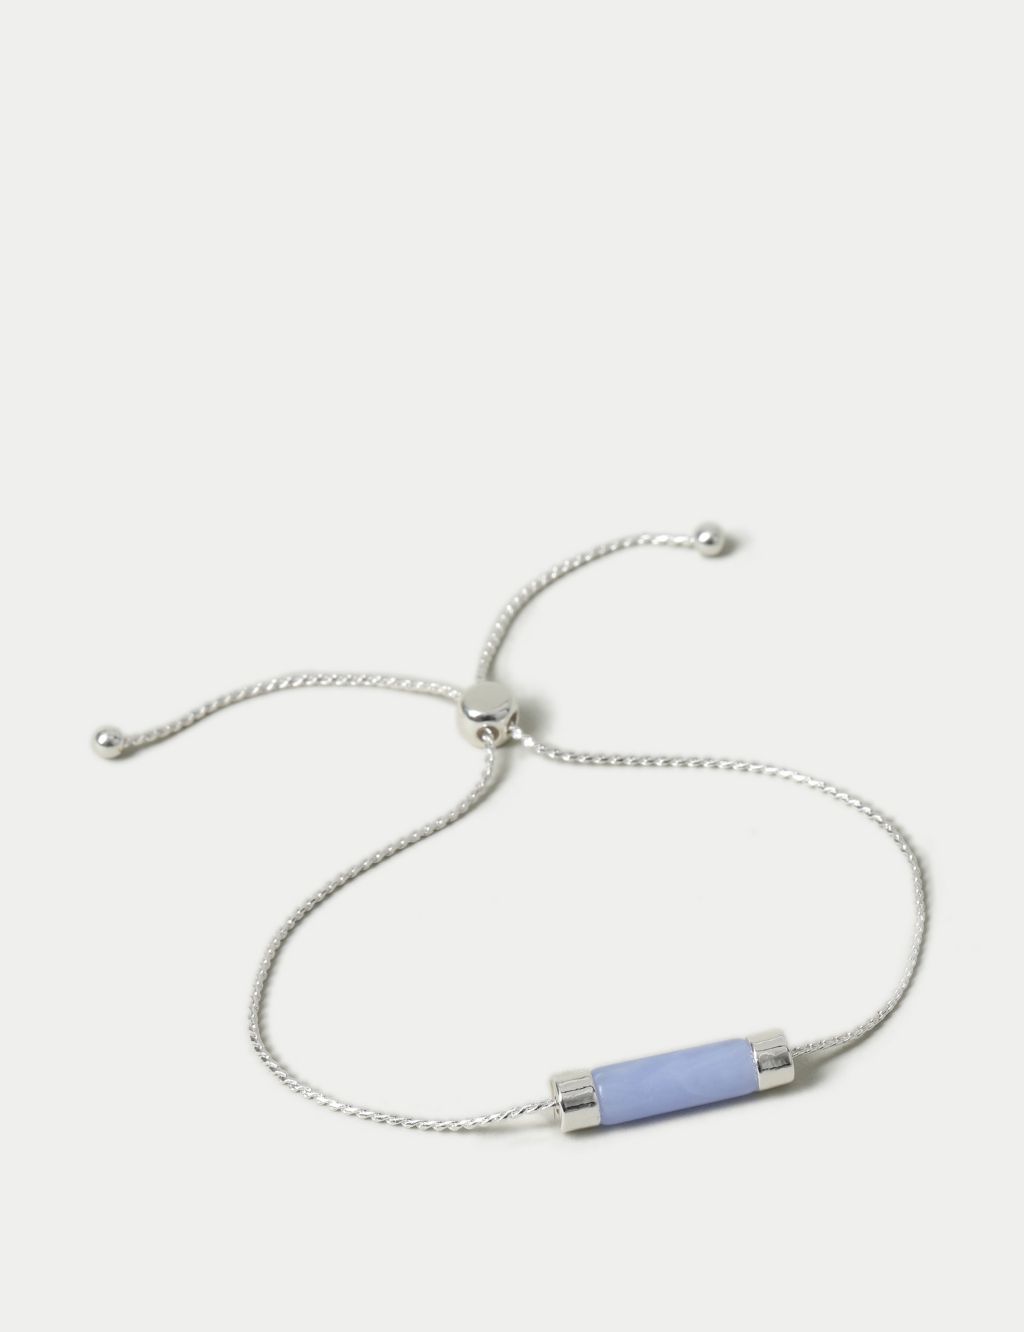 Blue Lace Agate Stretch Bracelet